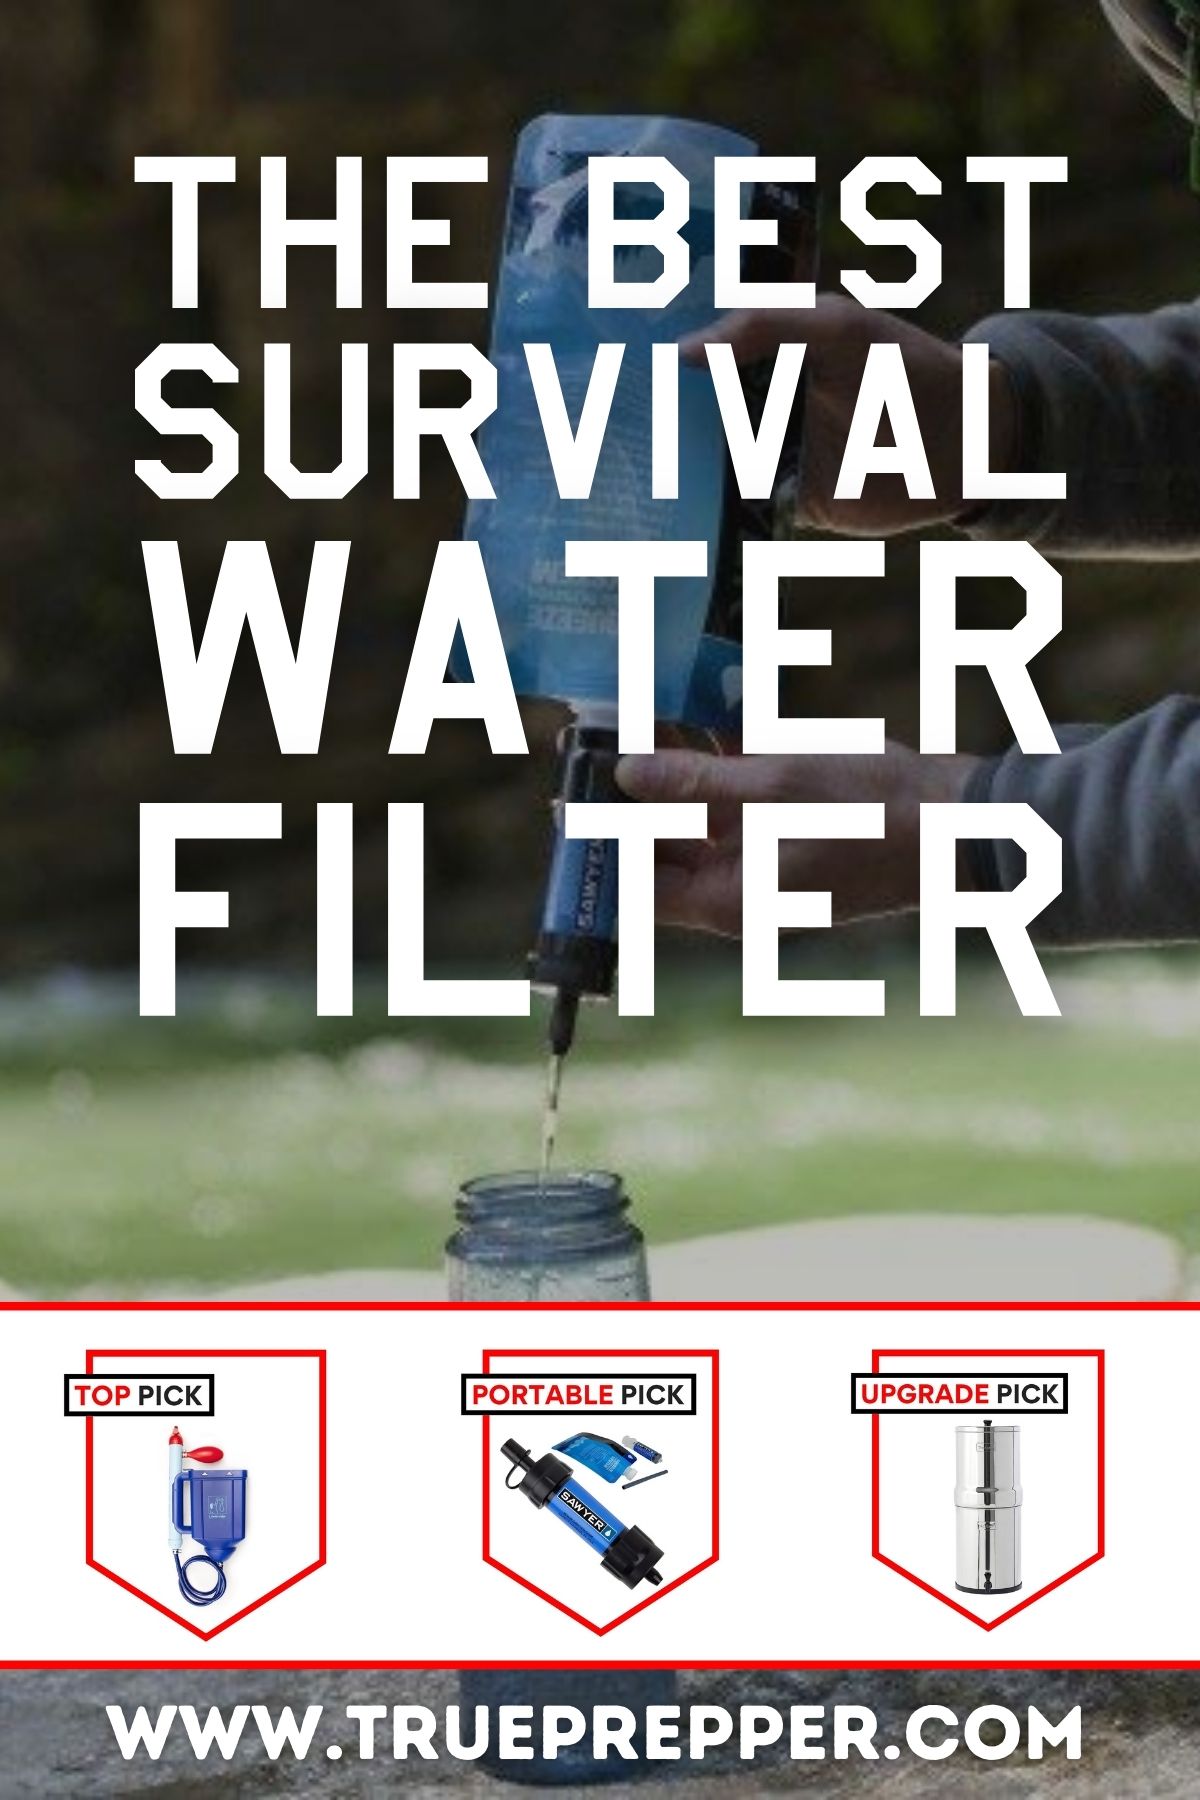 https://www.trueprepper.com/wp-content/uploads/The-Best-Survival-Water-Filter-1.jpg